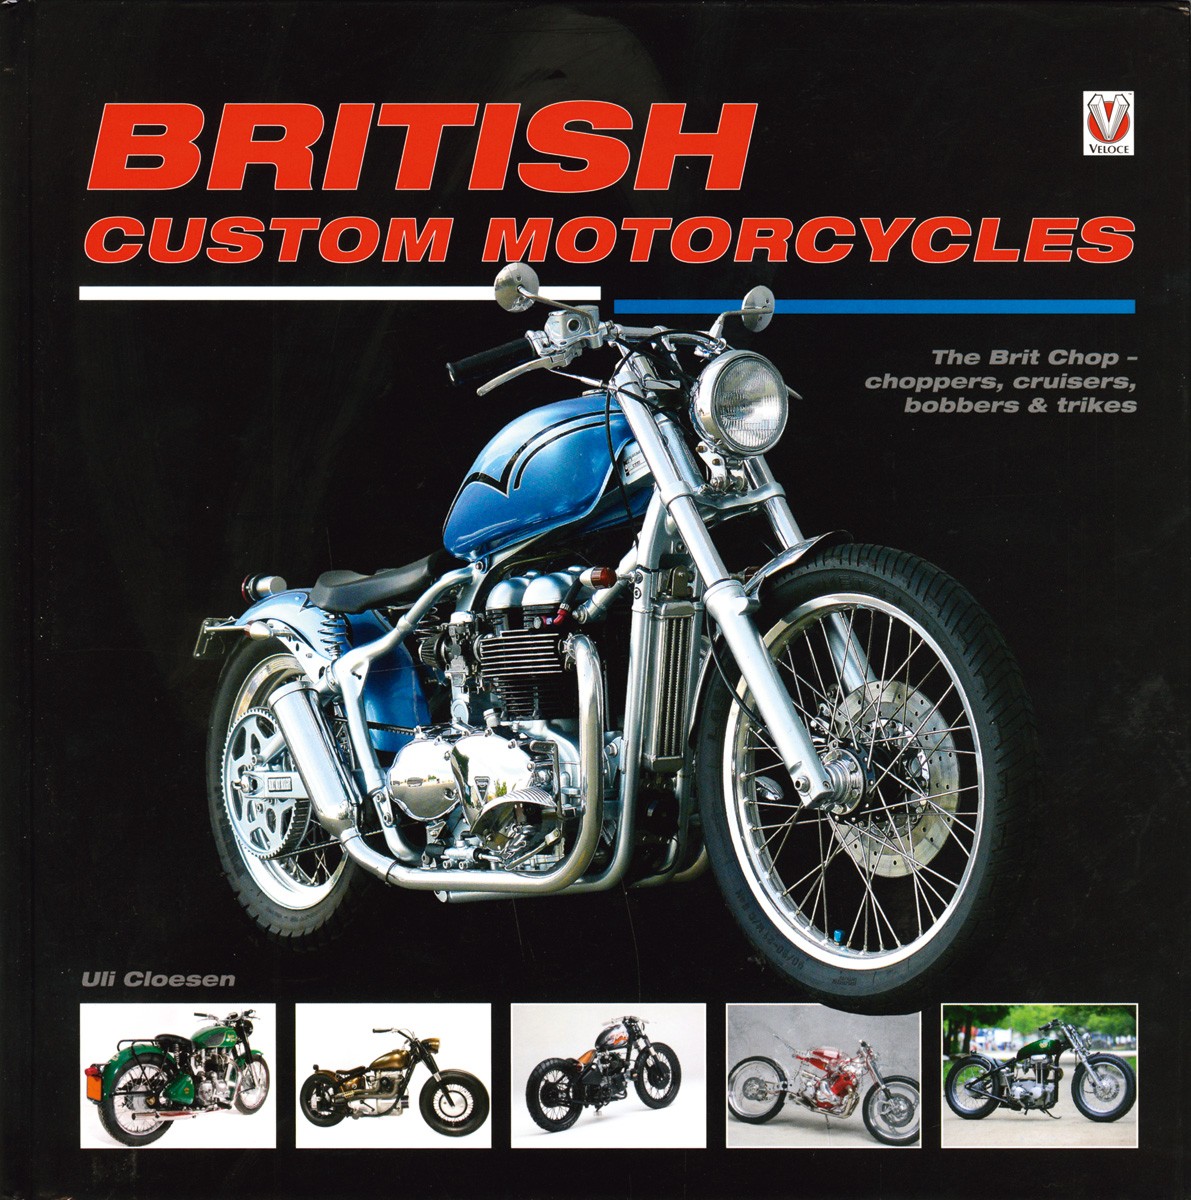 British custom motorcycles